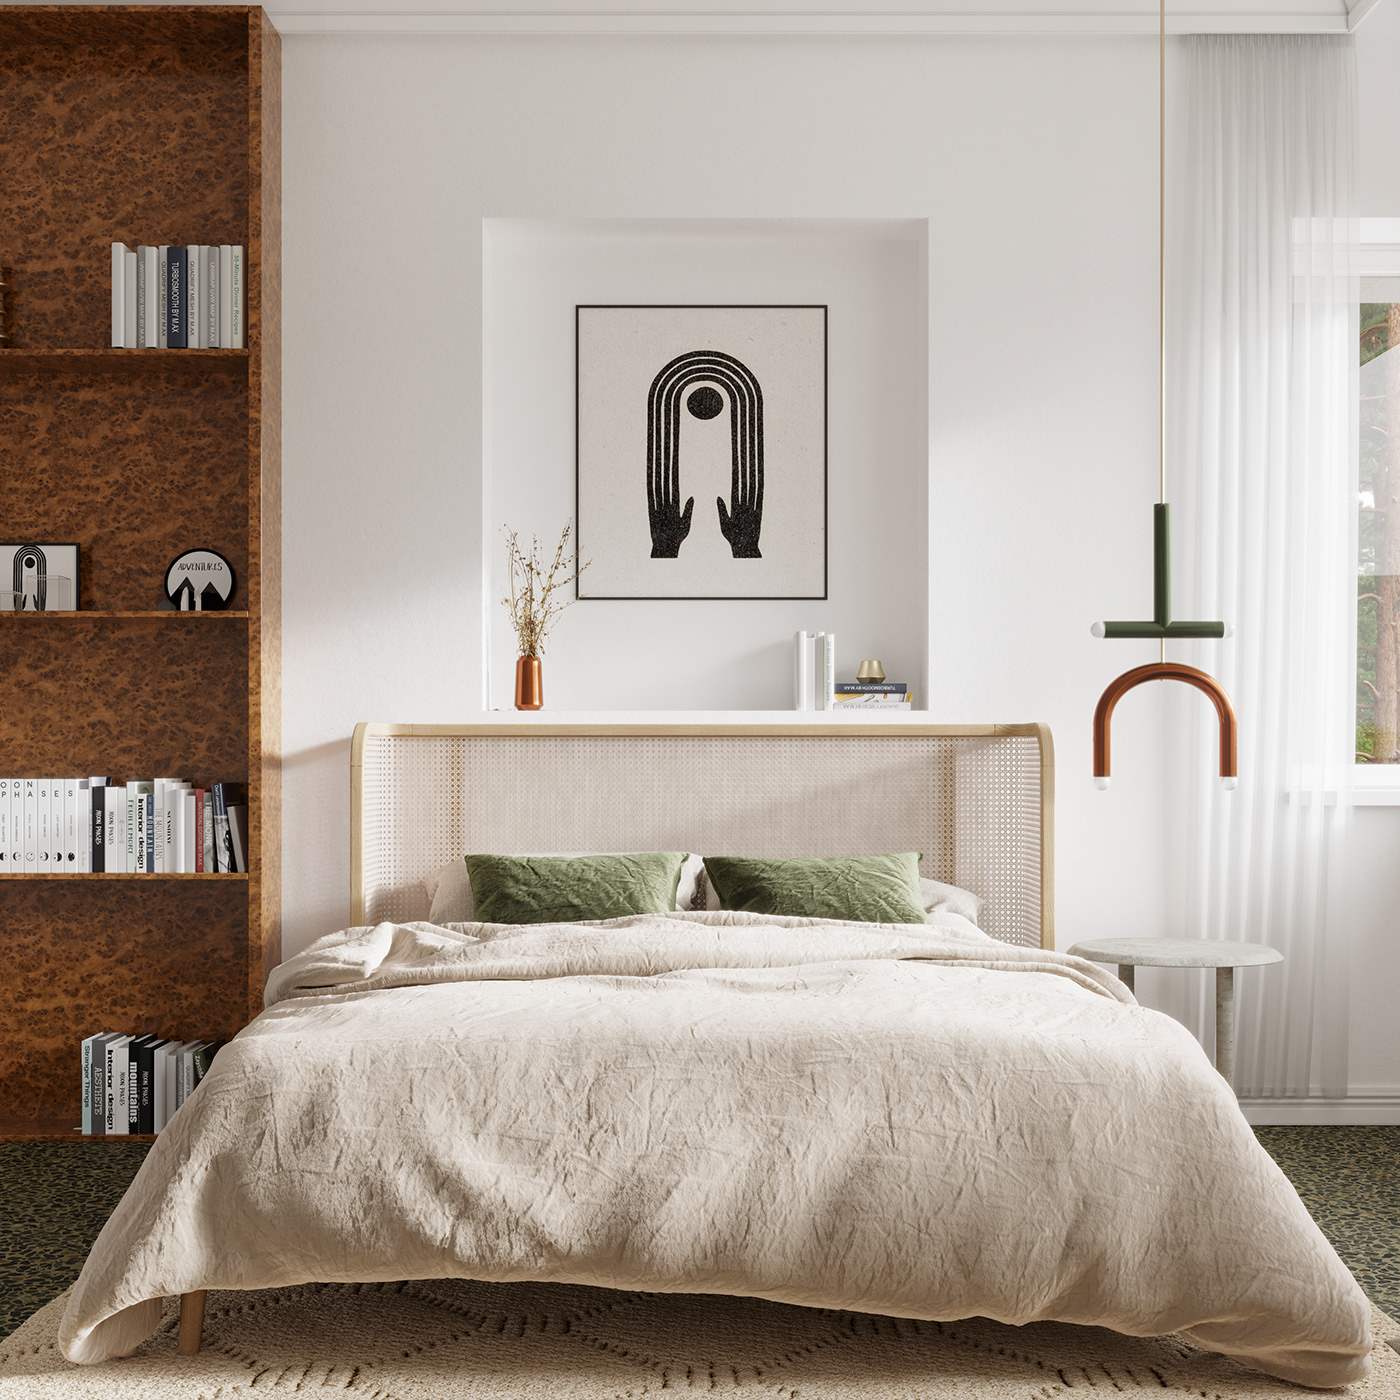 Bedroom Interior Variation With Scandinavian Style 9 